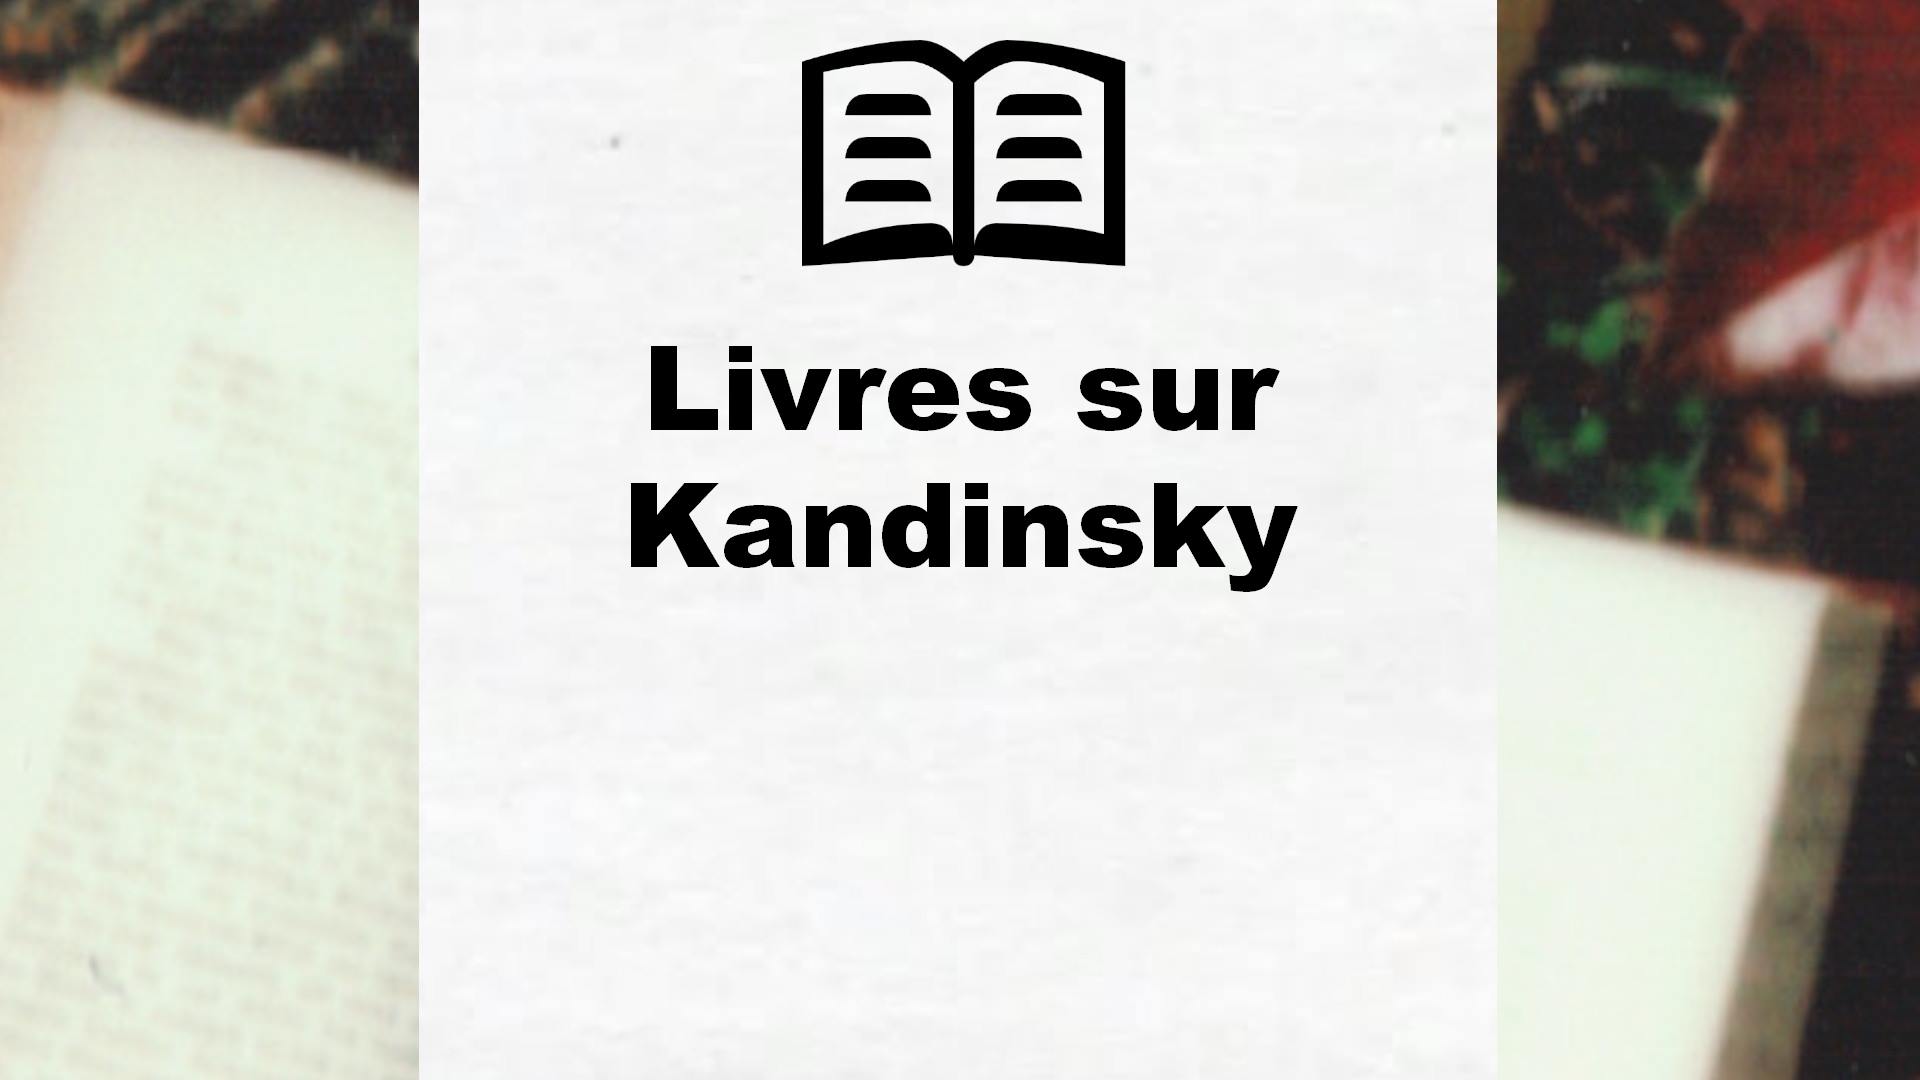 Livres sur Kandinsky